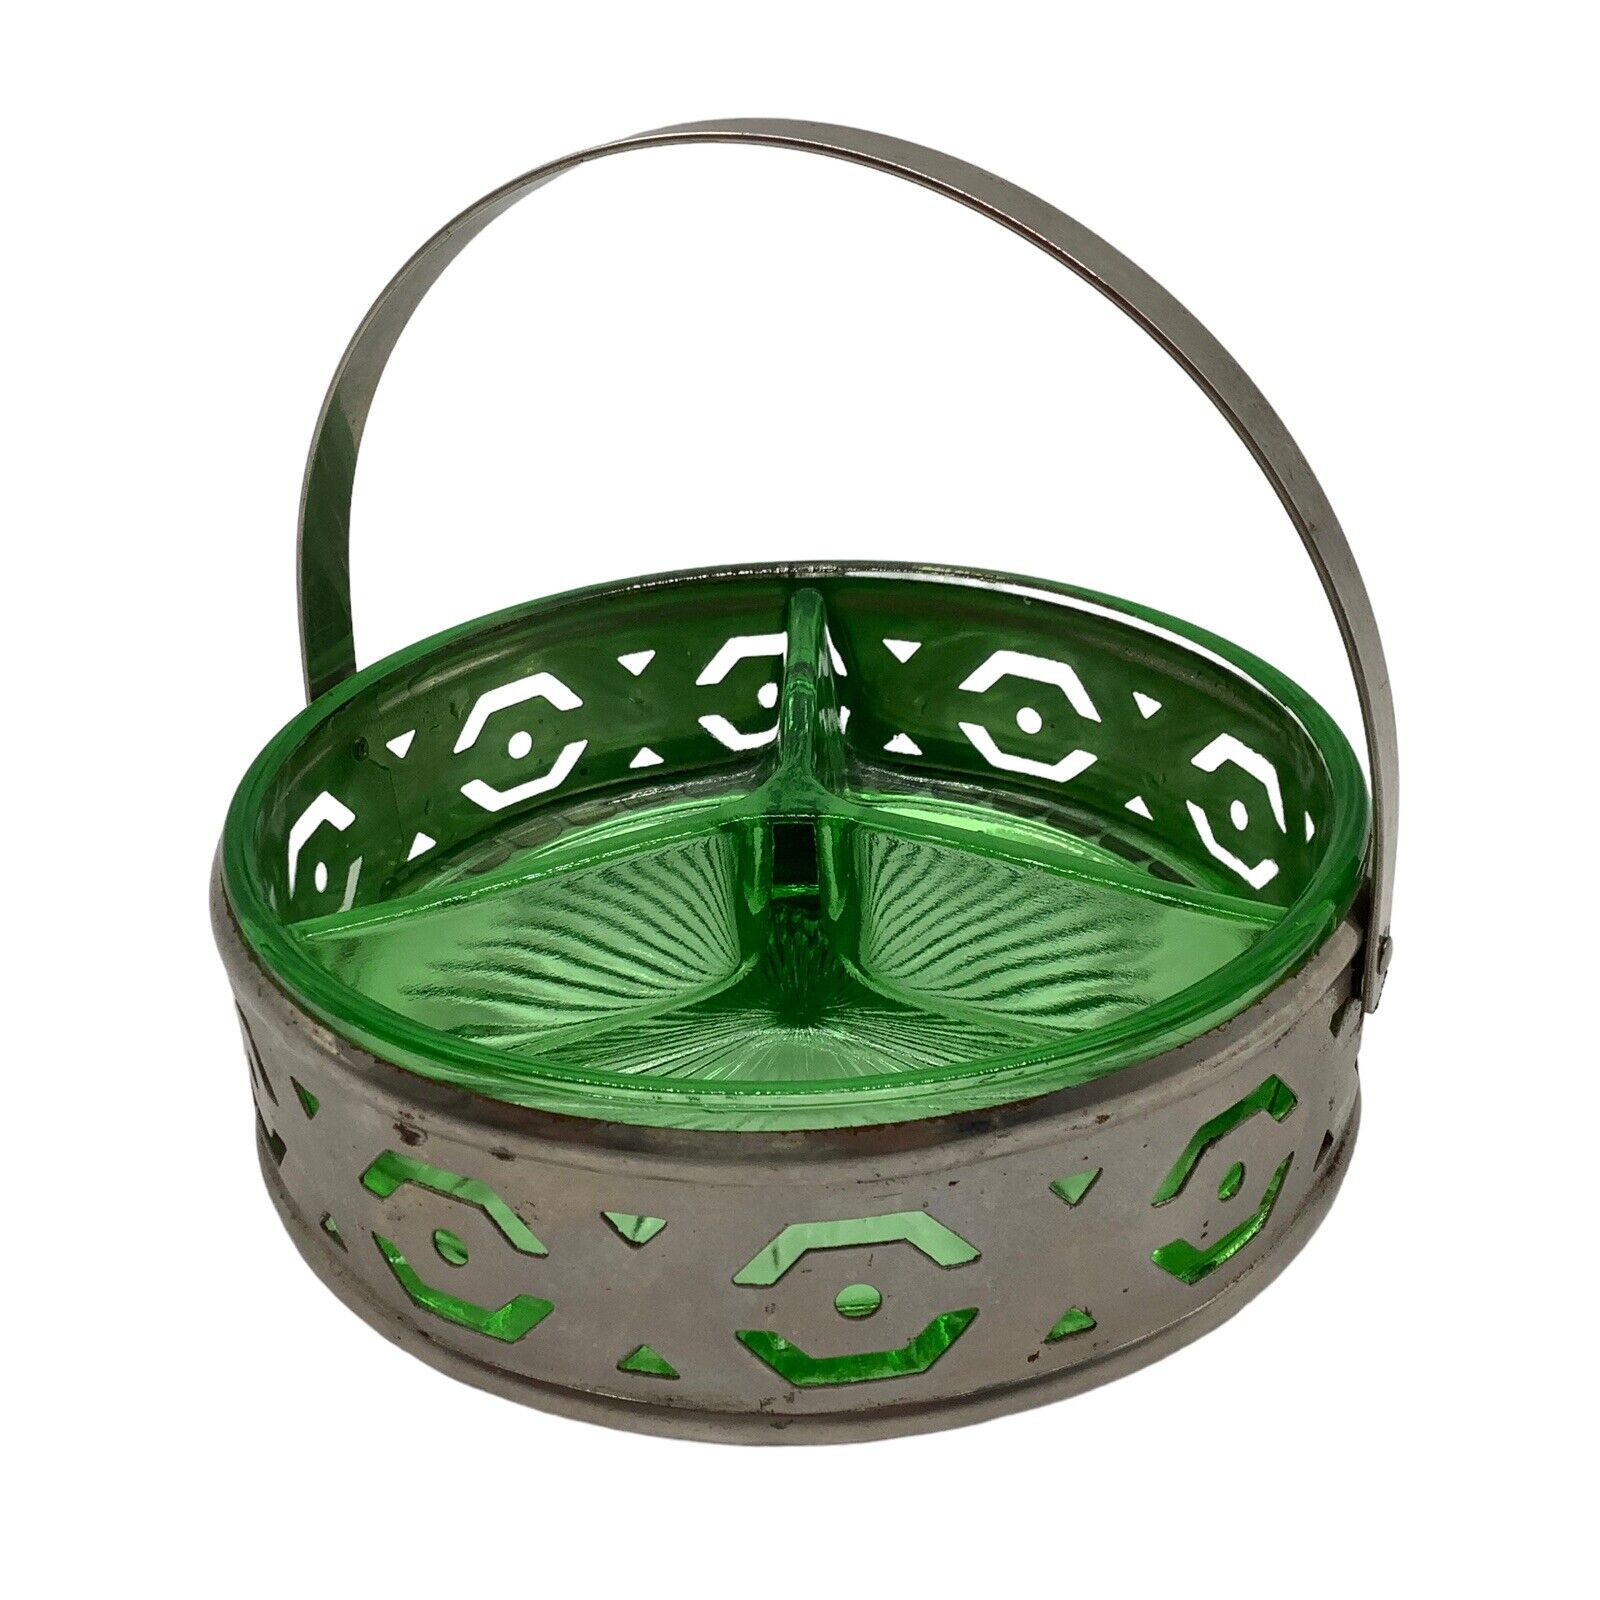 Green Vintage Glowey Vaseline Divided Dish with Silver Metal Carry Basket